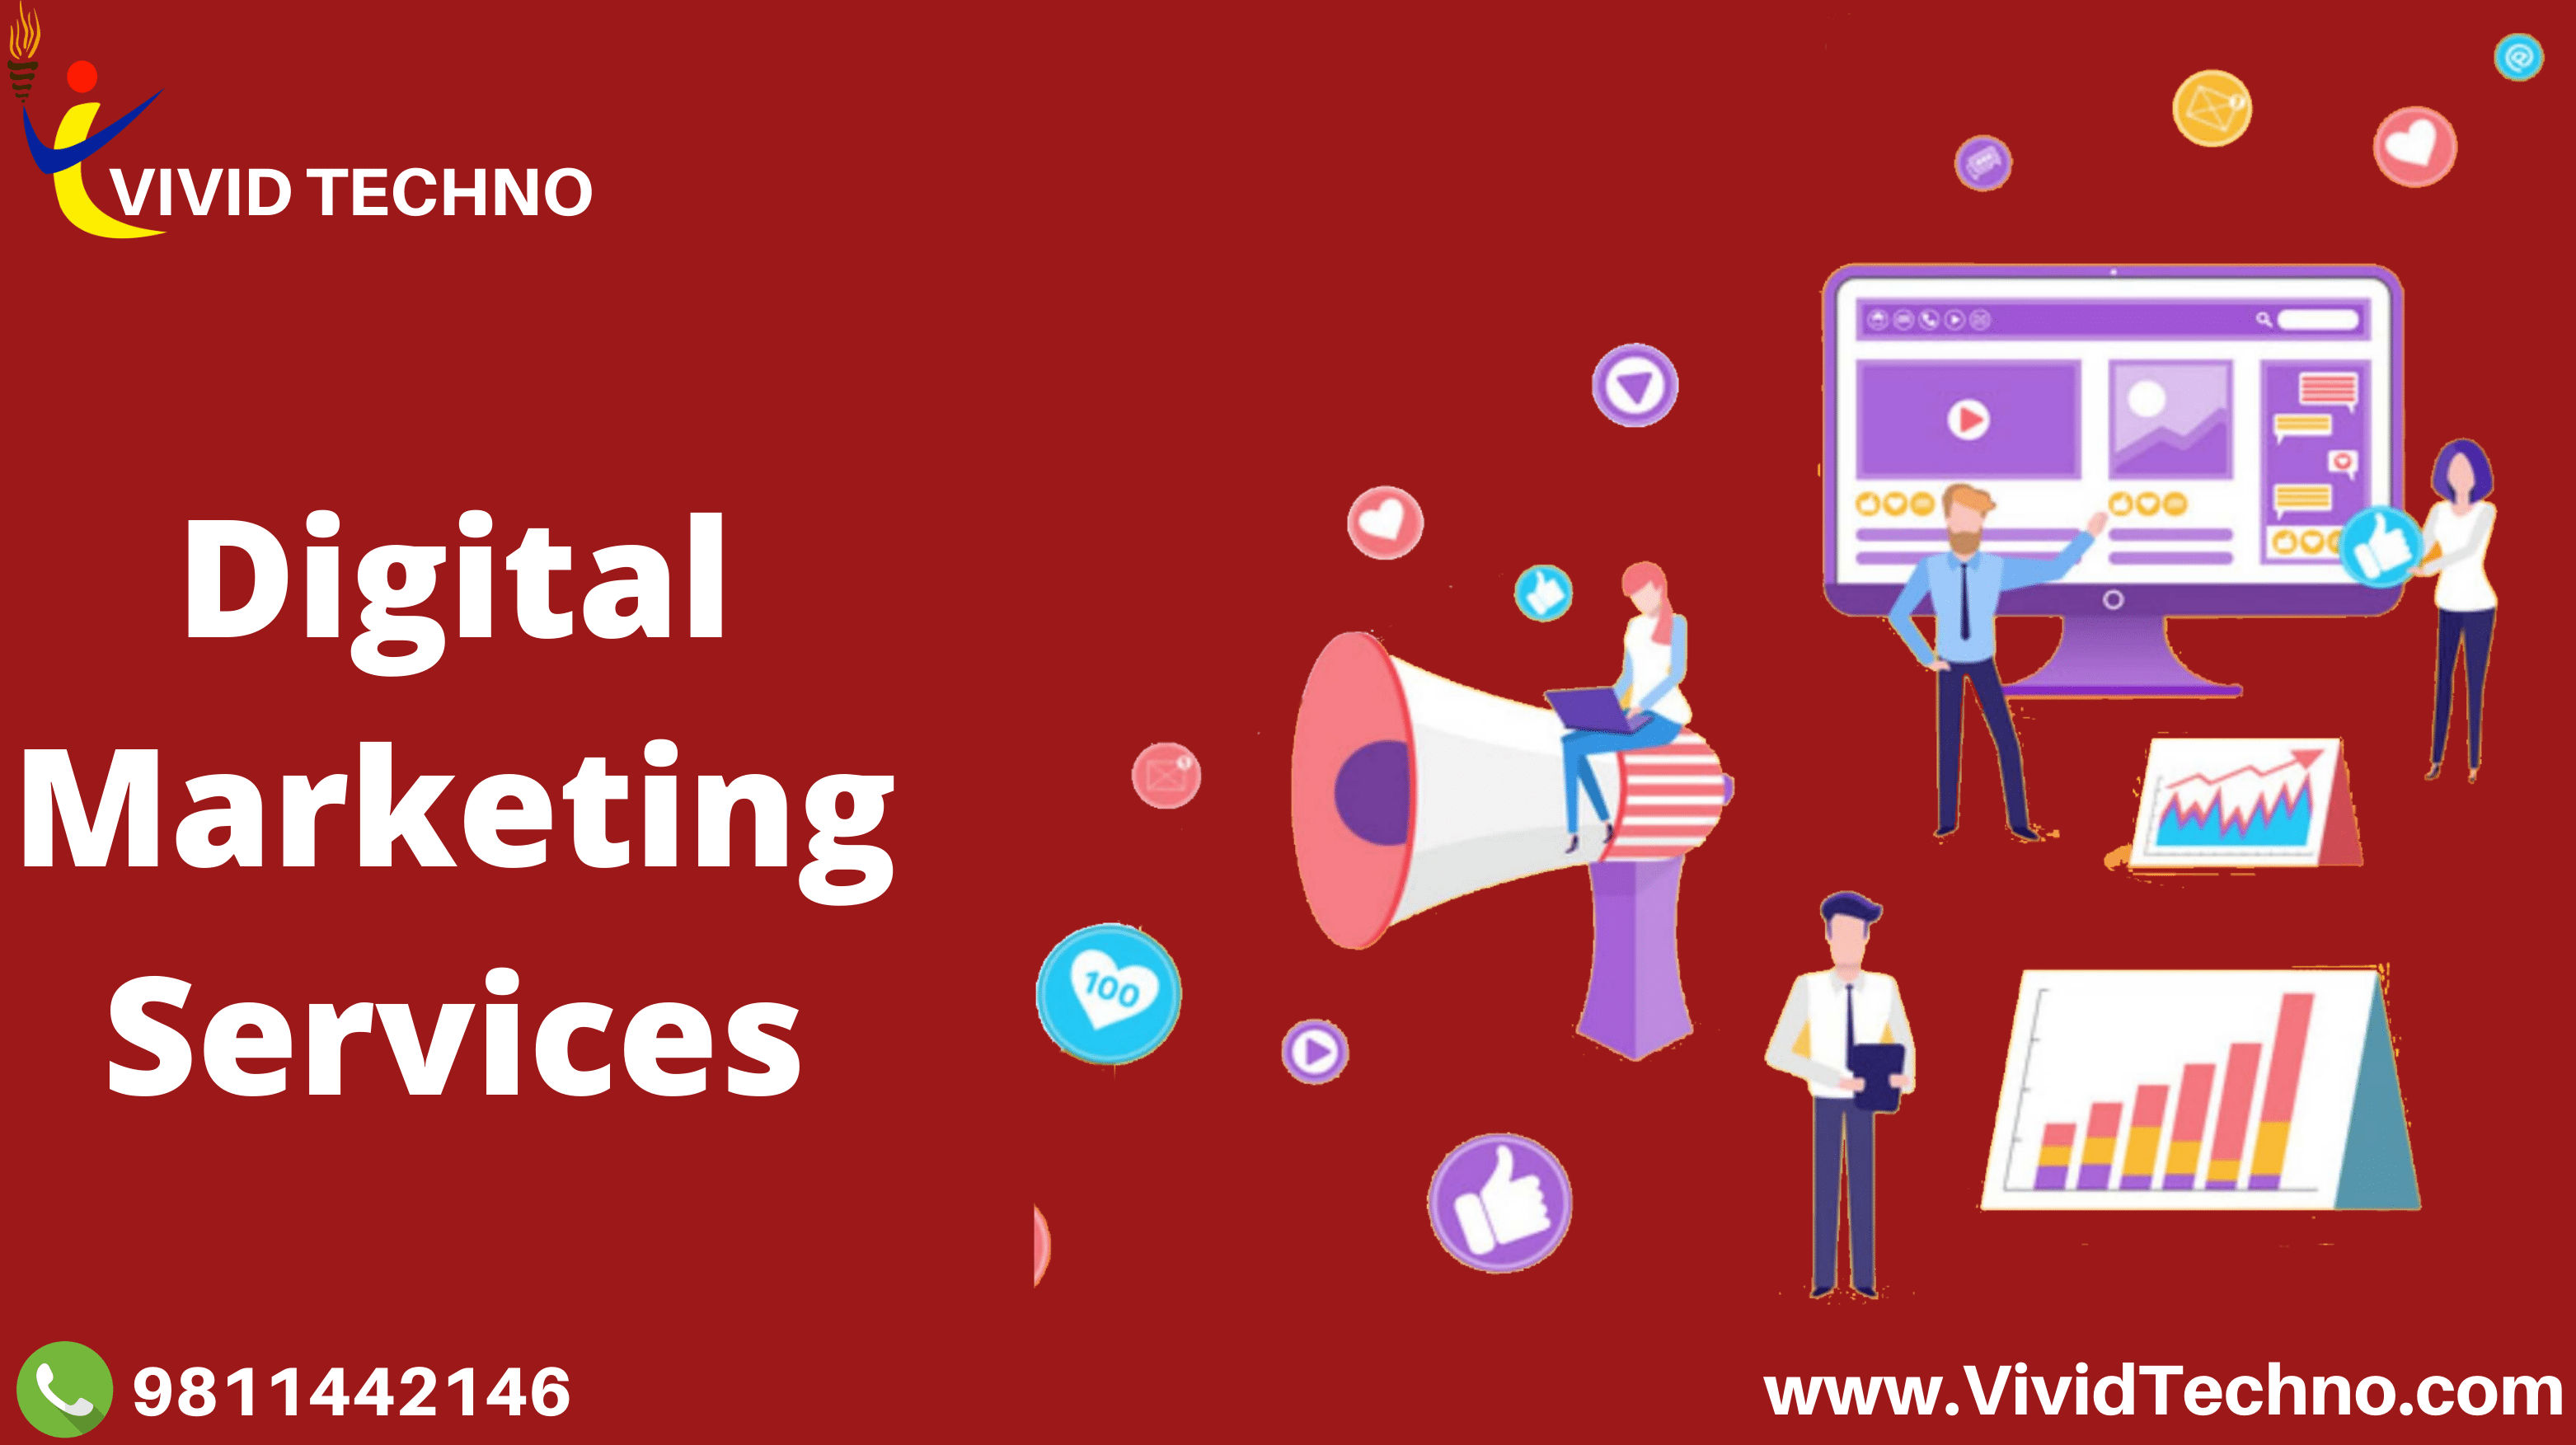 Social Media Marketing Services in Delhi NCR,social media marketing agency,social marketing services inc, Vivid Techno Best Web Company India